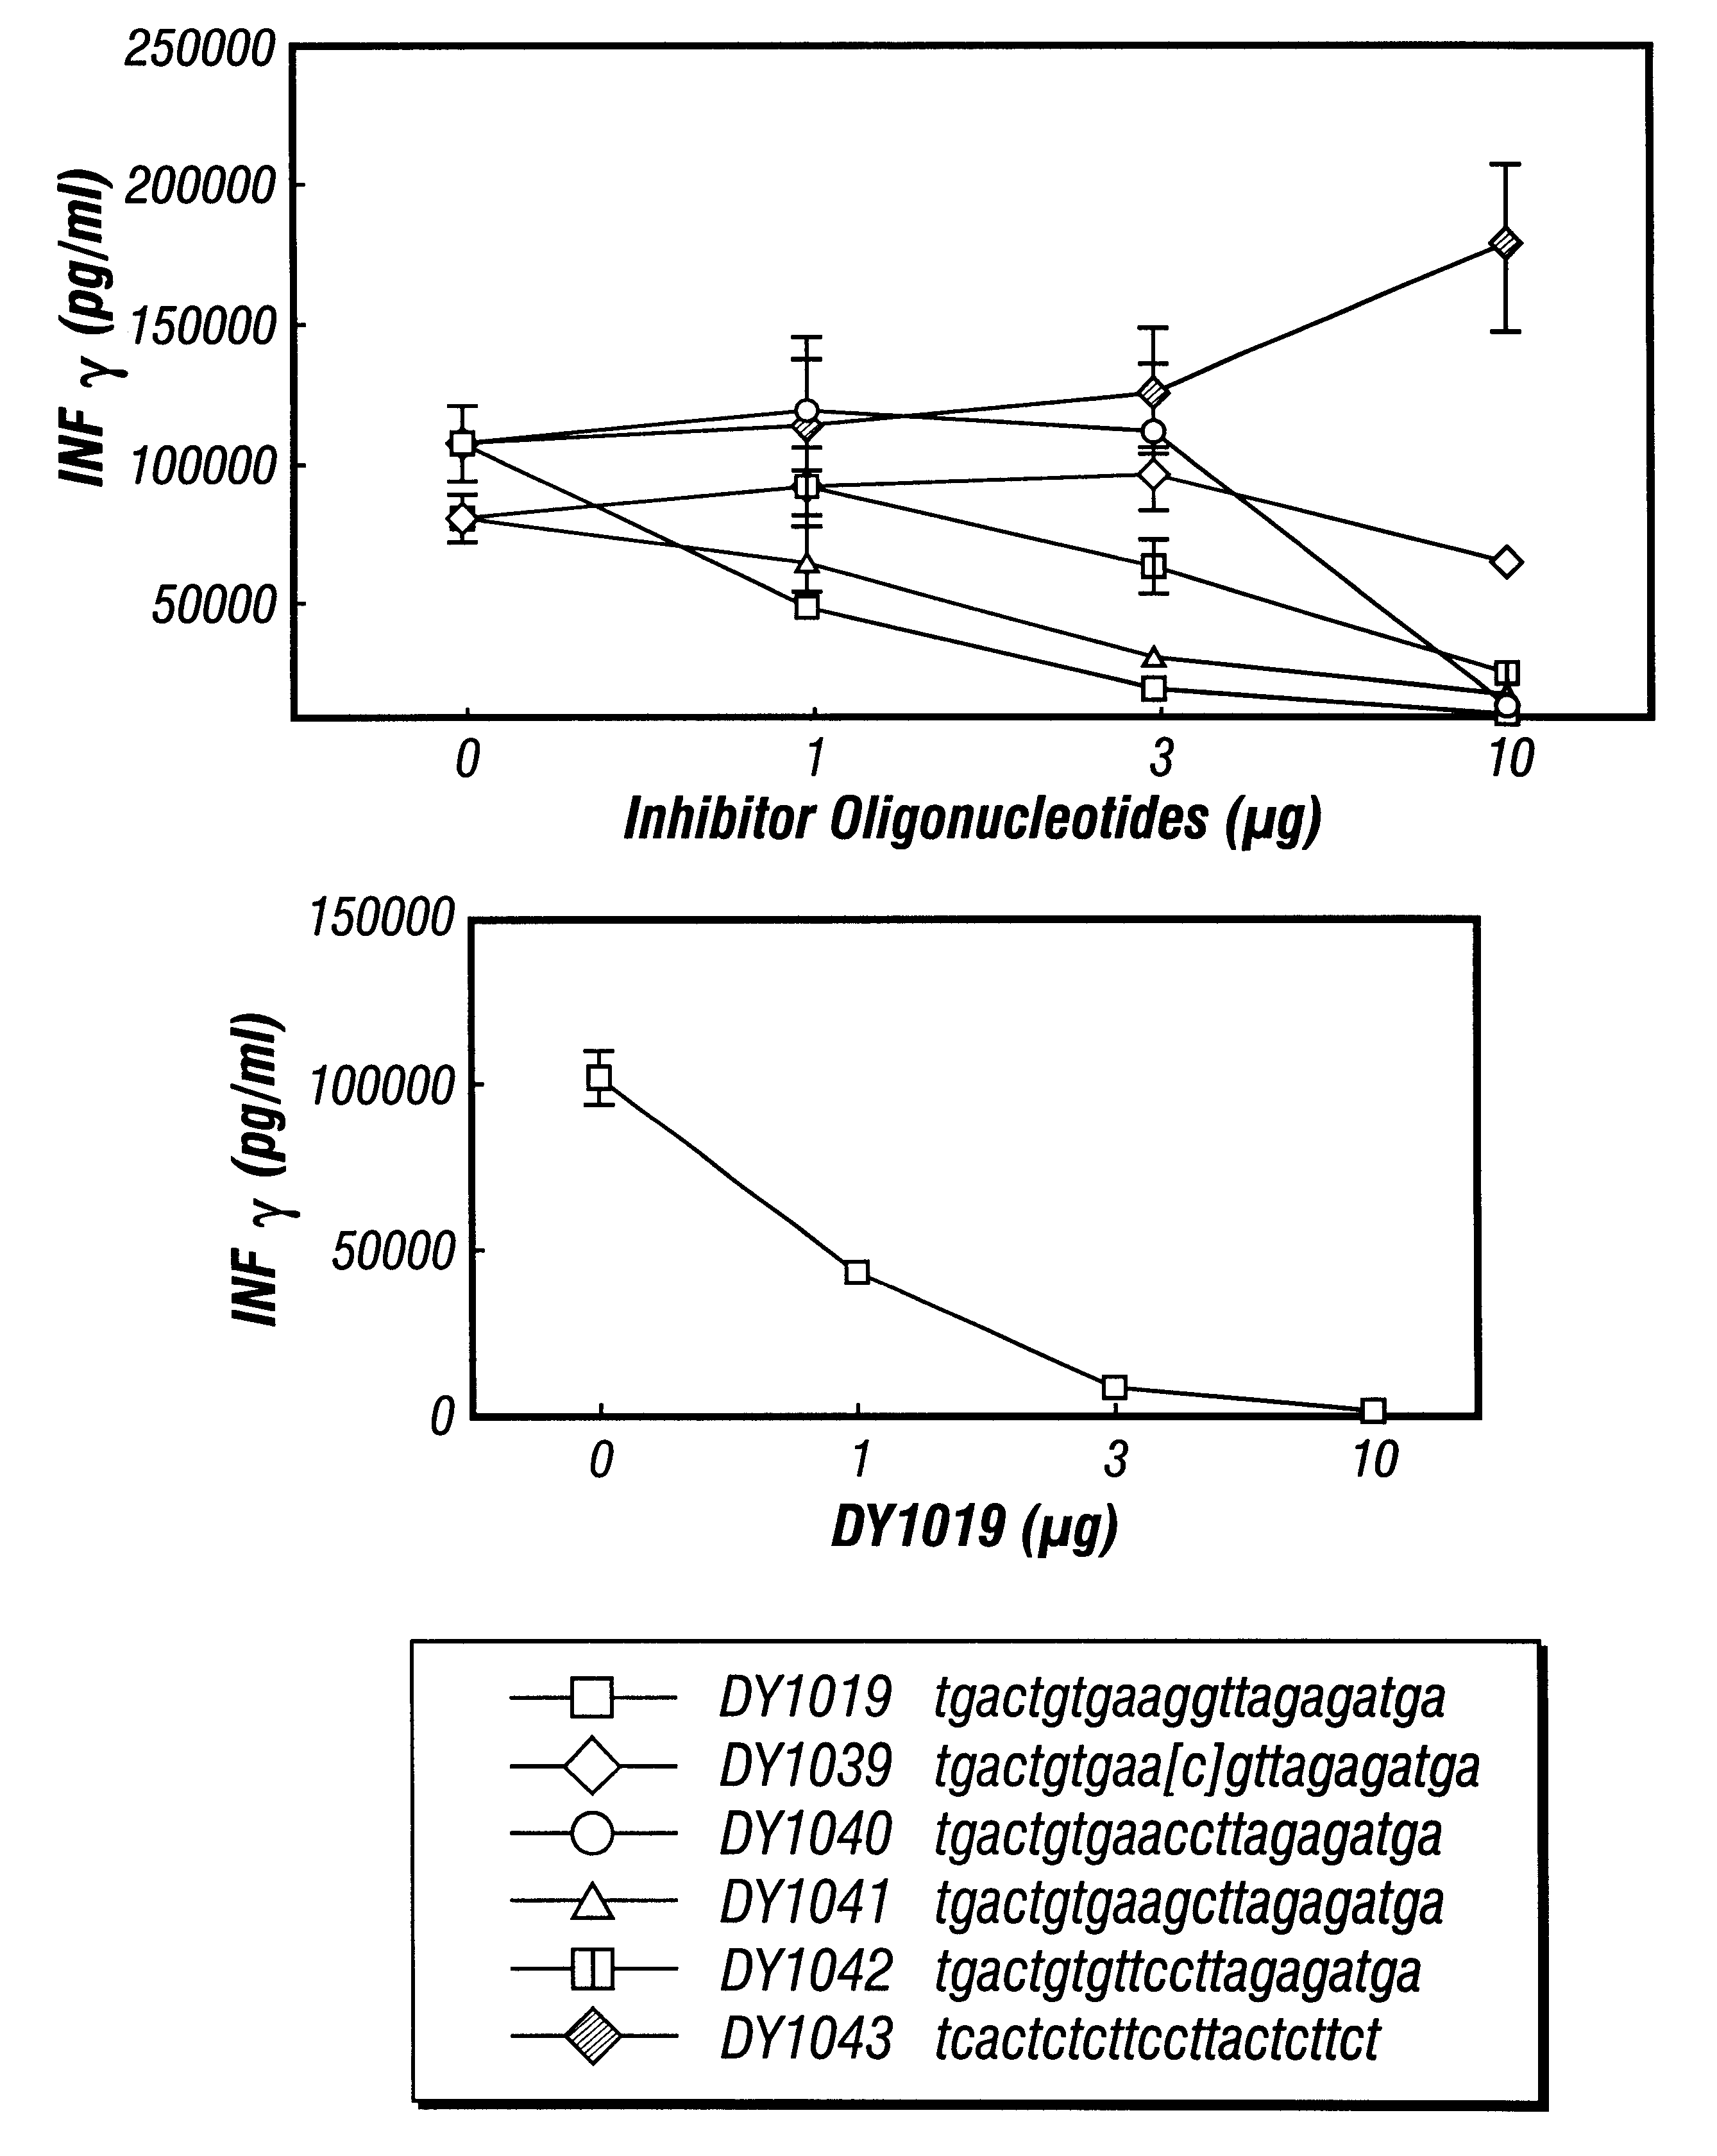 Inhibitors of DNA immunostimulatory sequence activity